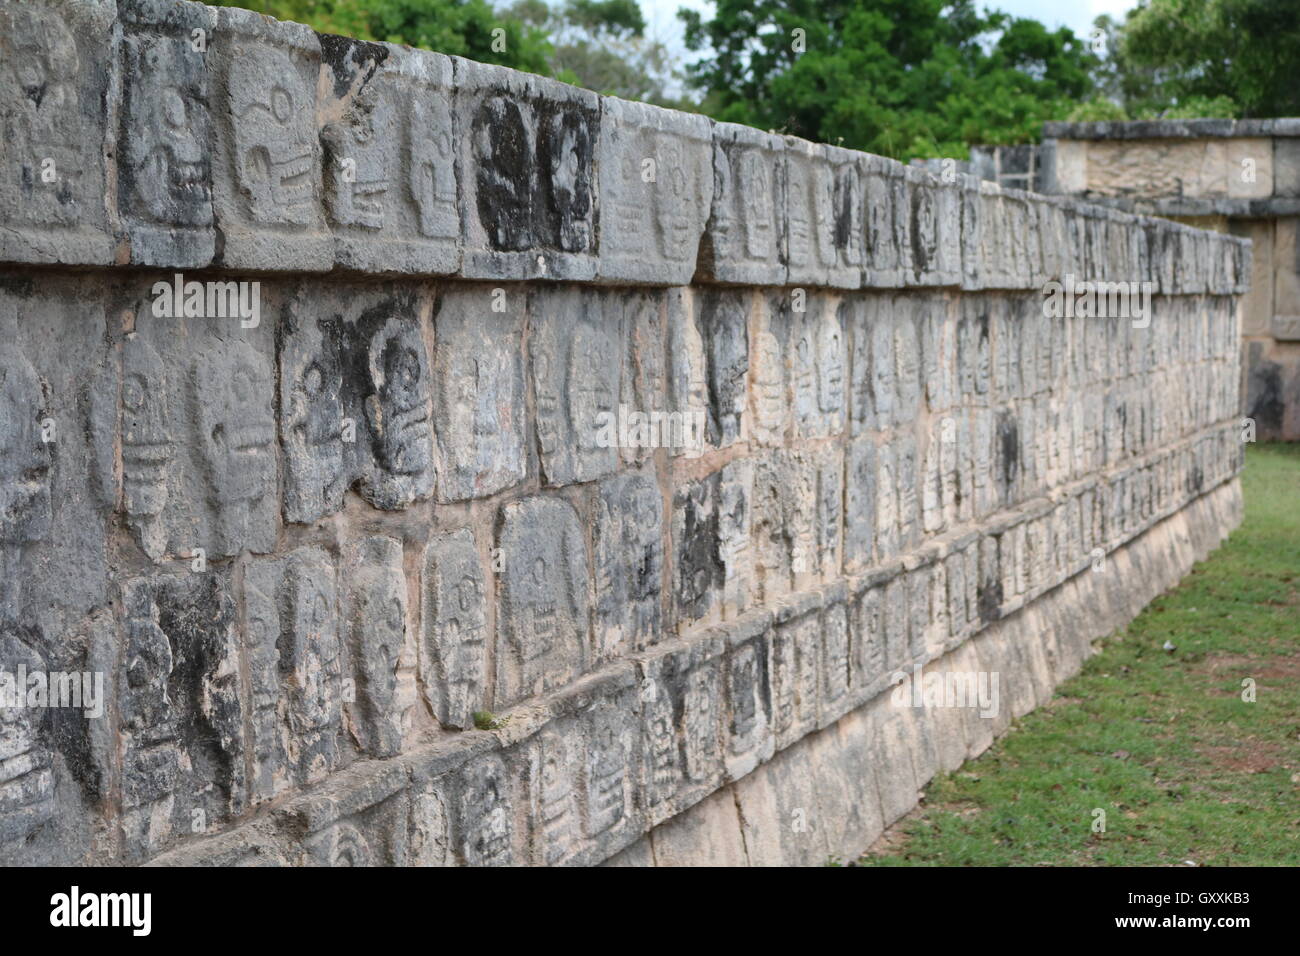 Ancient Aztec Skull wall art found at Chichen Itza, Mexico Stock Photo